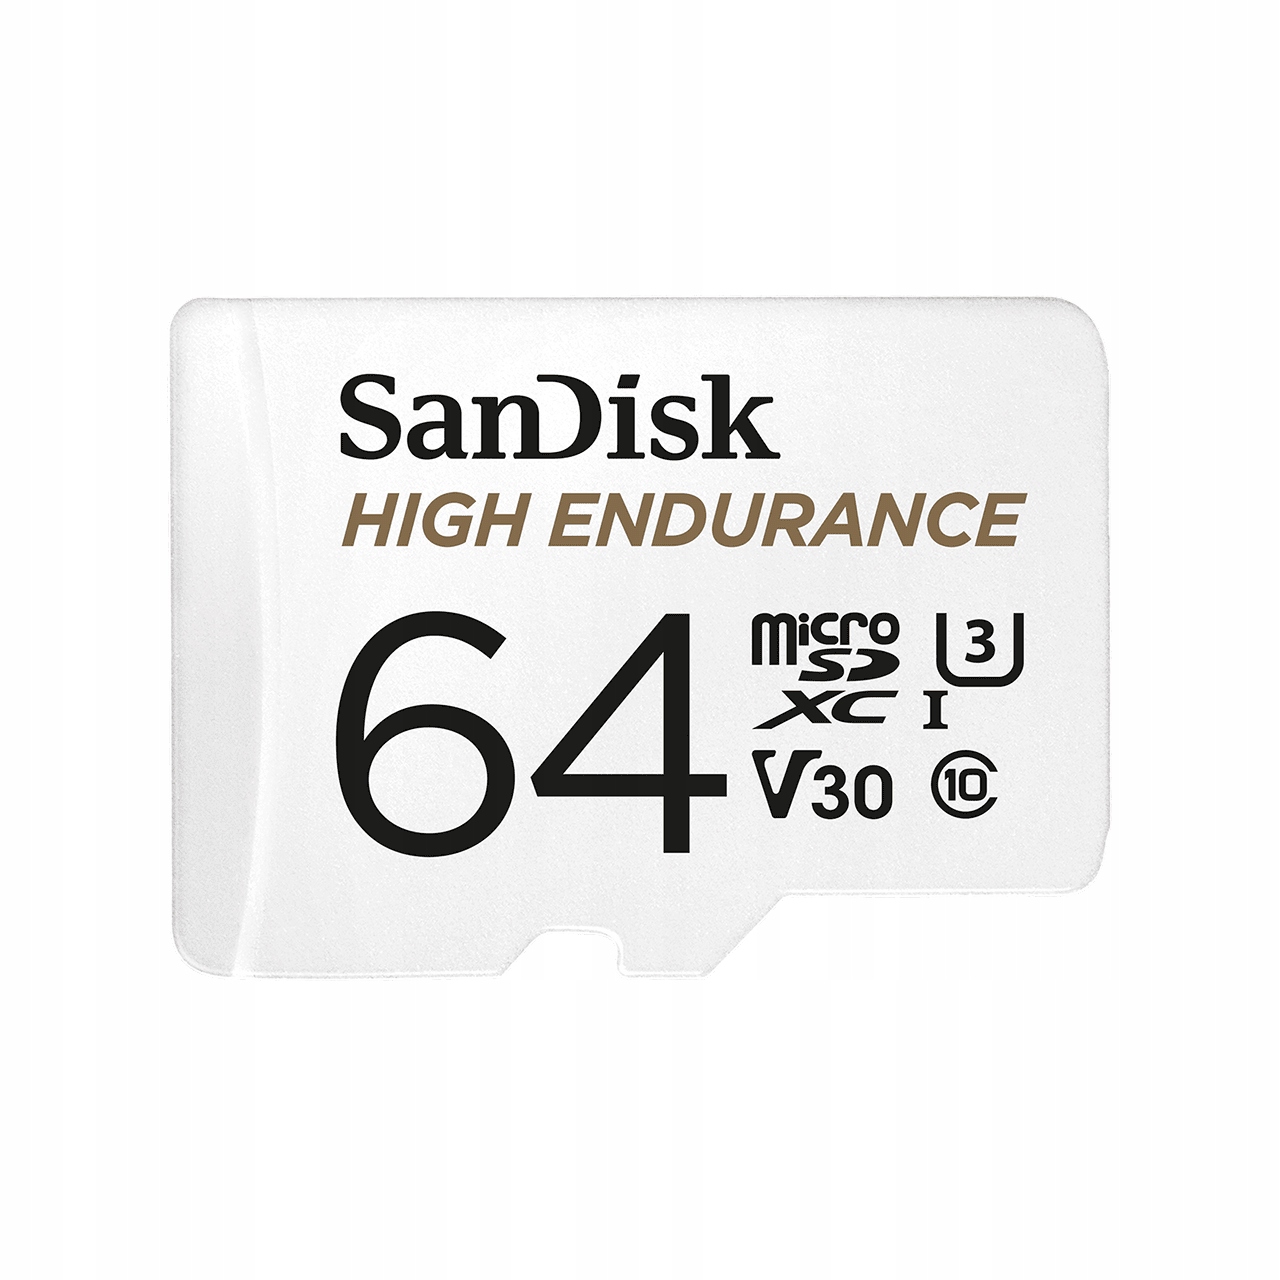 SanDisk High Endurance SDXC карта памяти 64GB производитель SanDisk